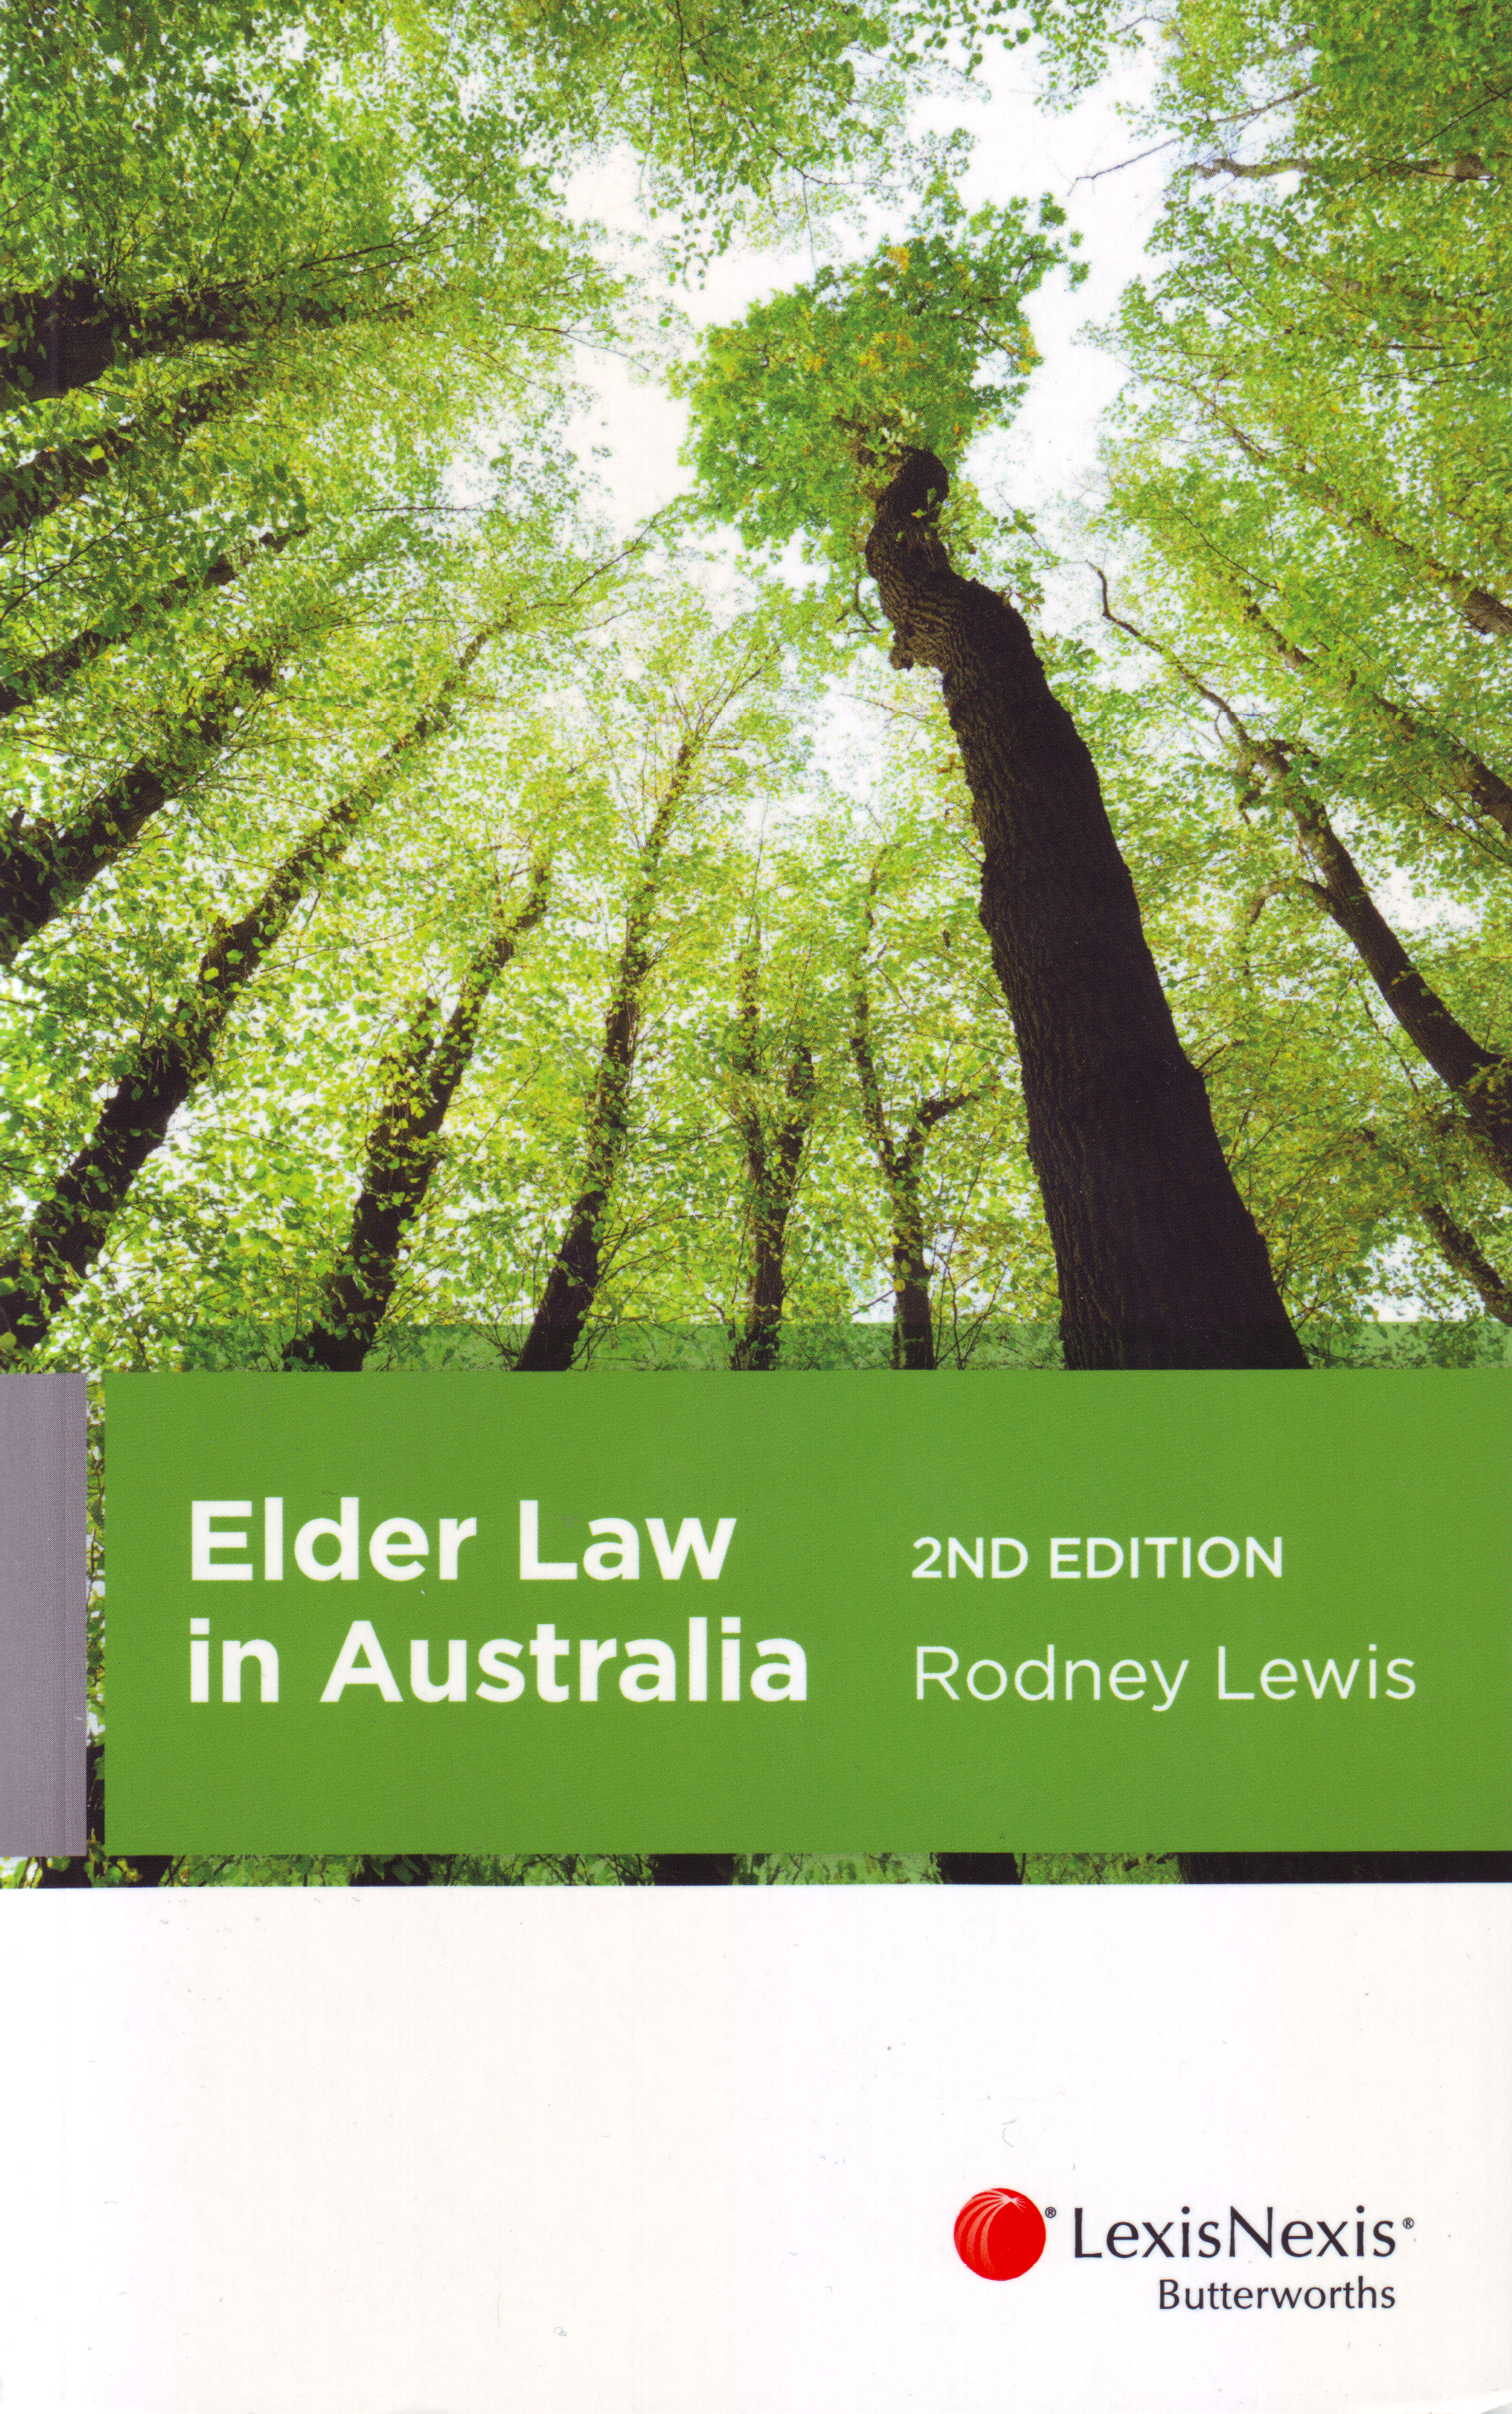 Elder Law in Australia e2